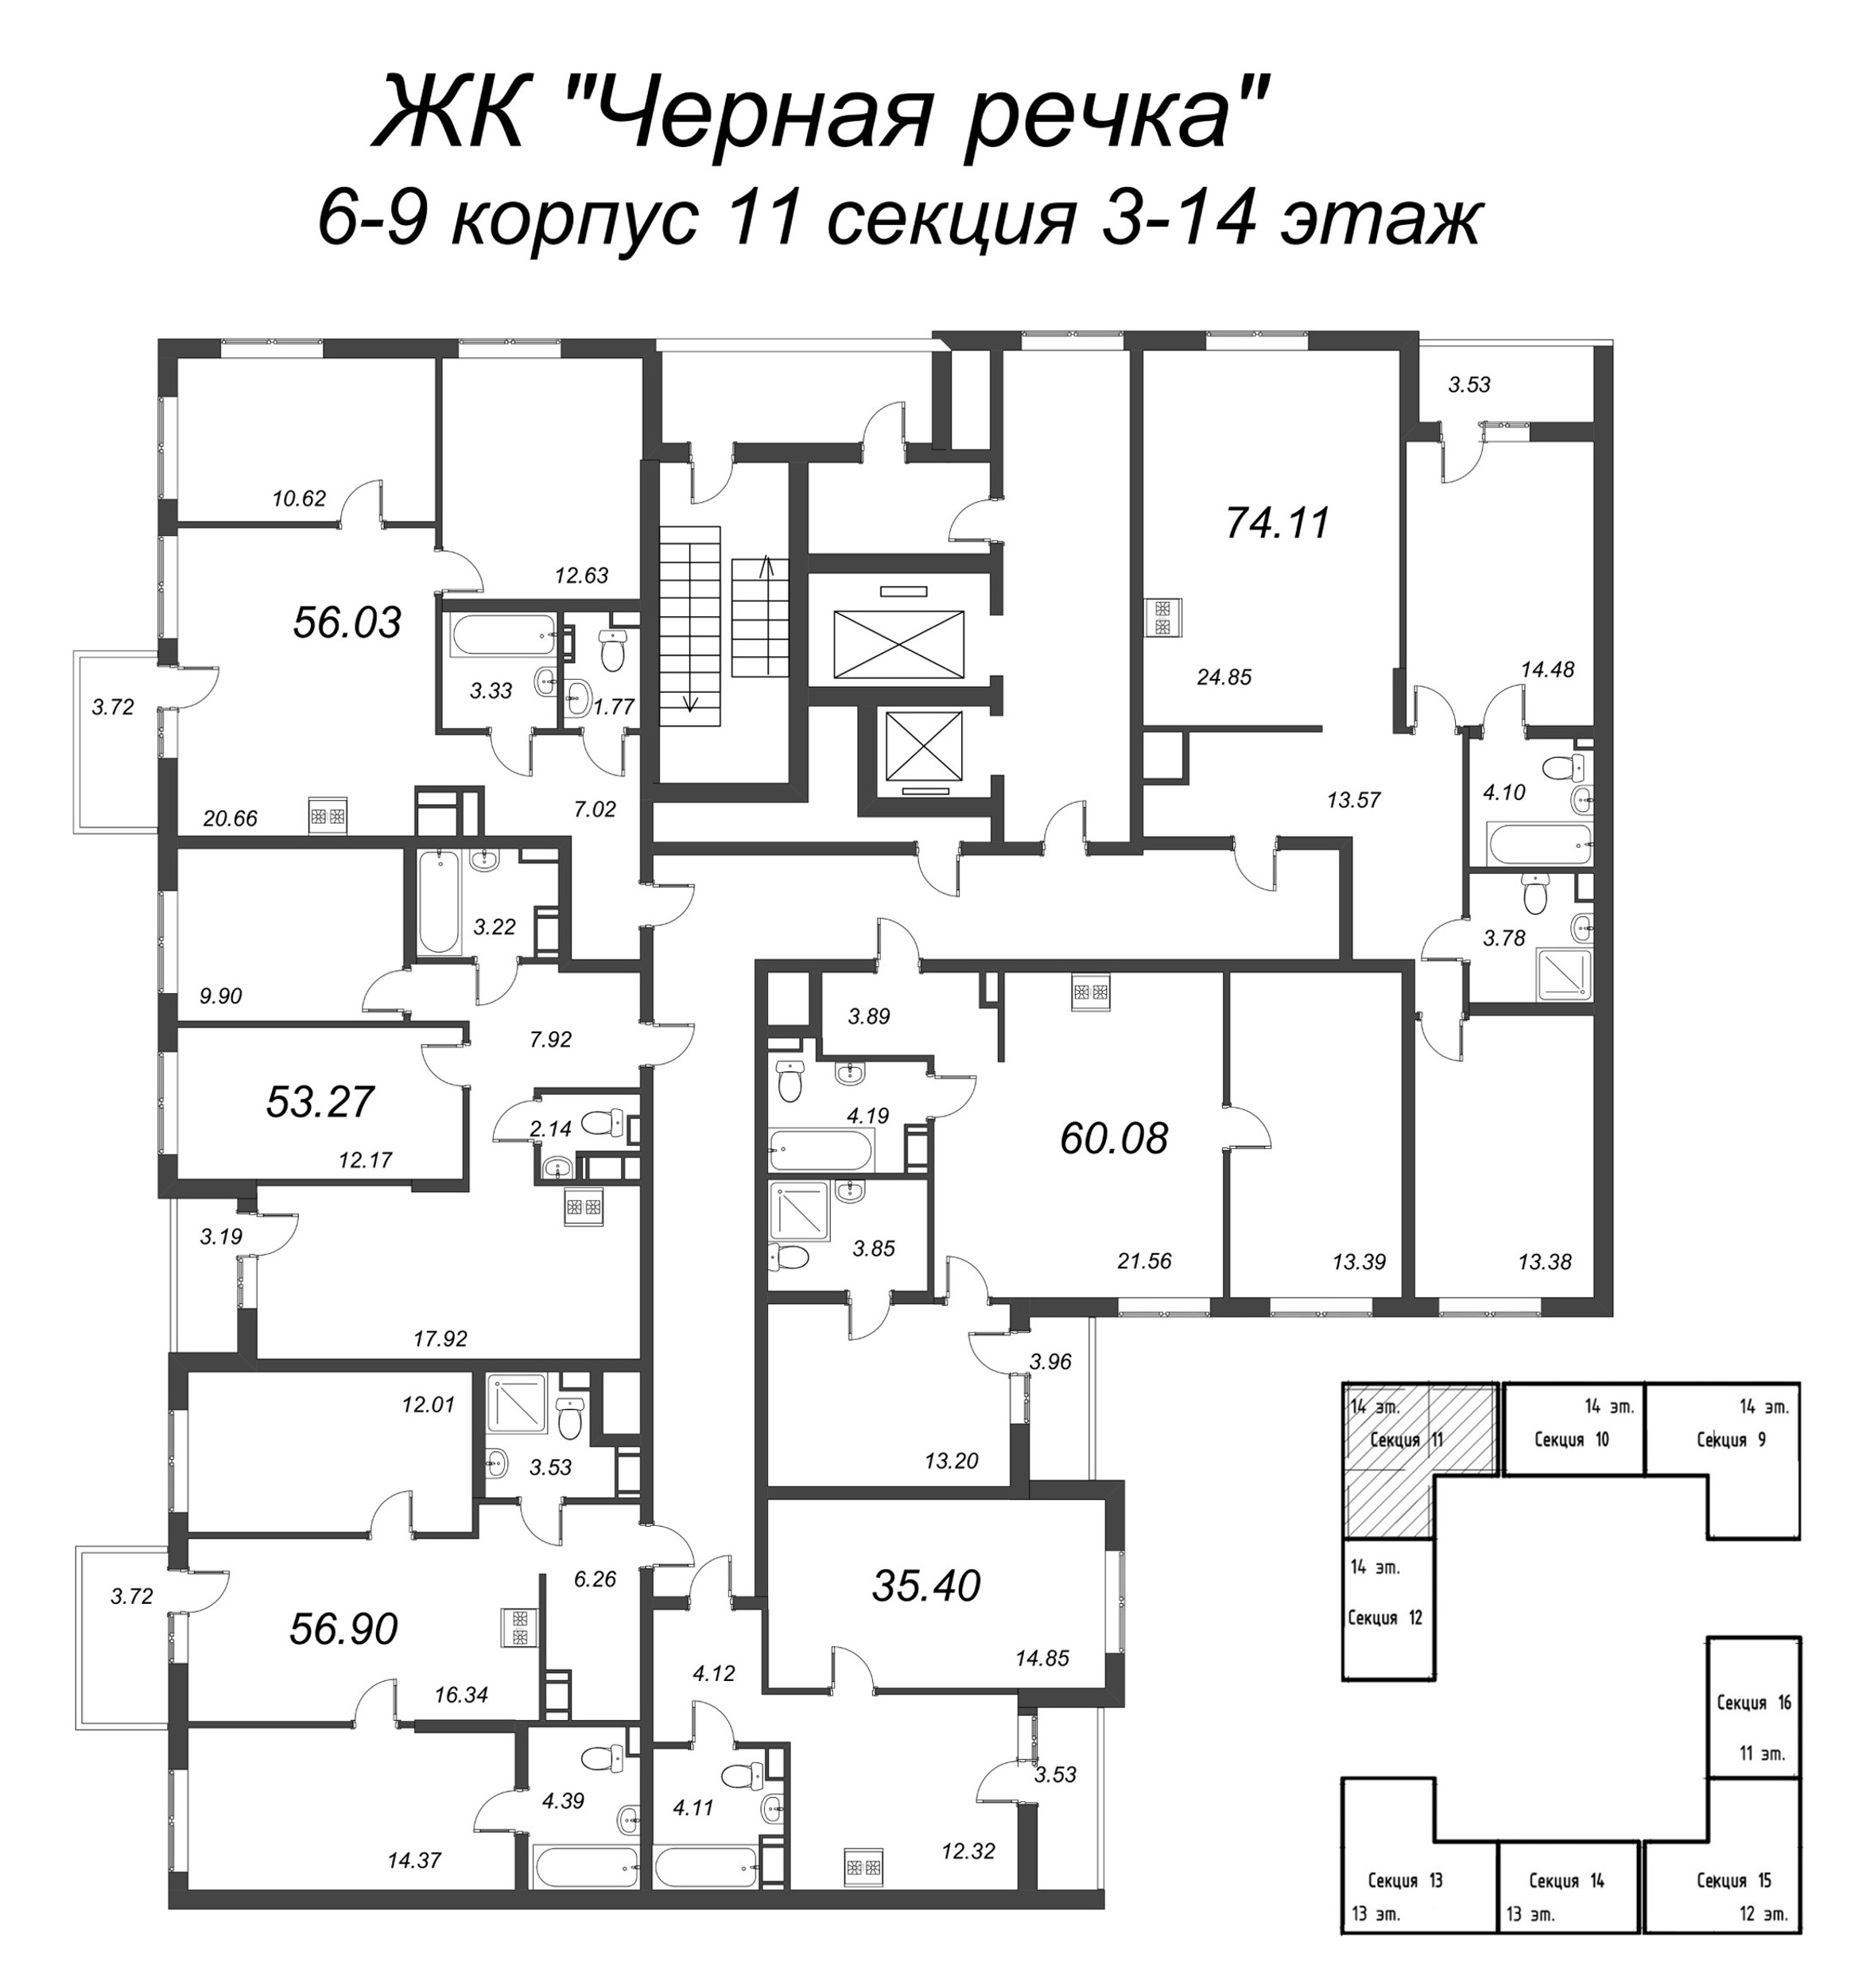 3-комнатная (Евро) квартира, 74.11 м² - планировка этажа